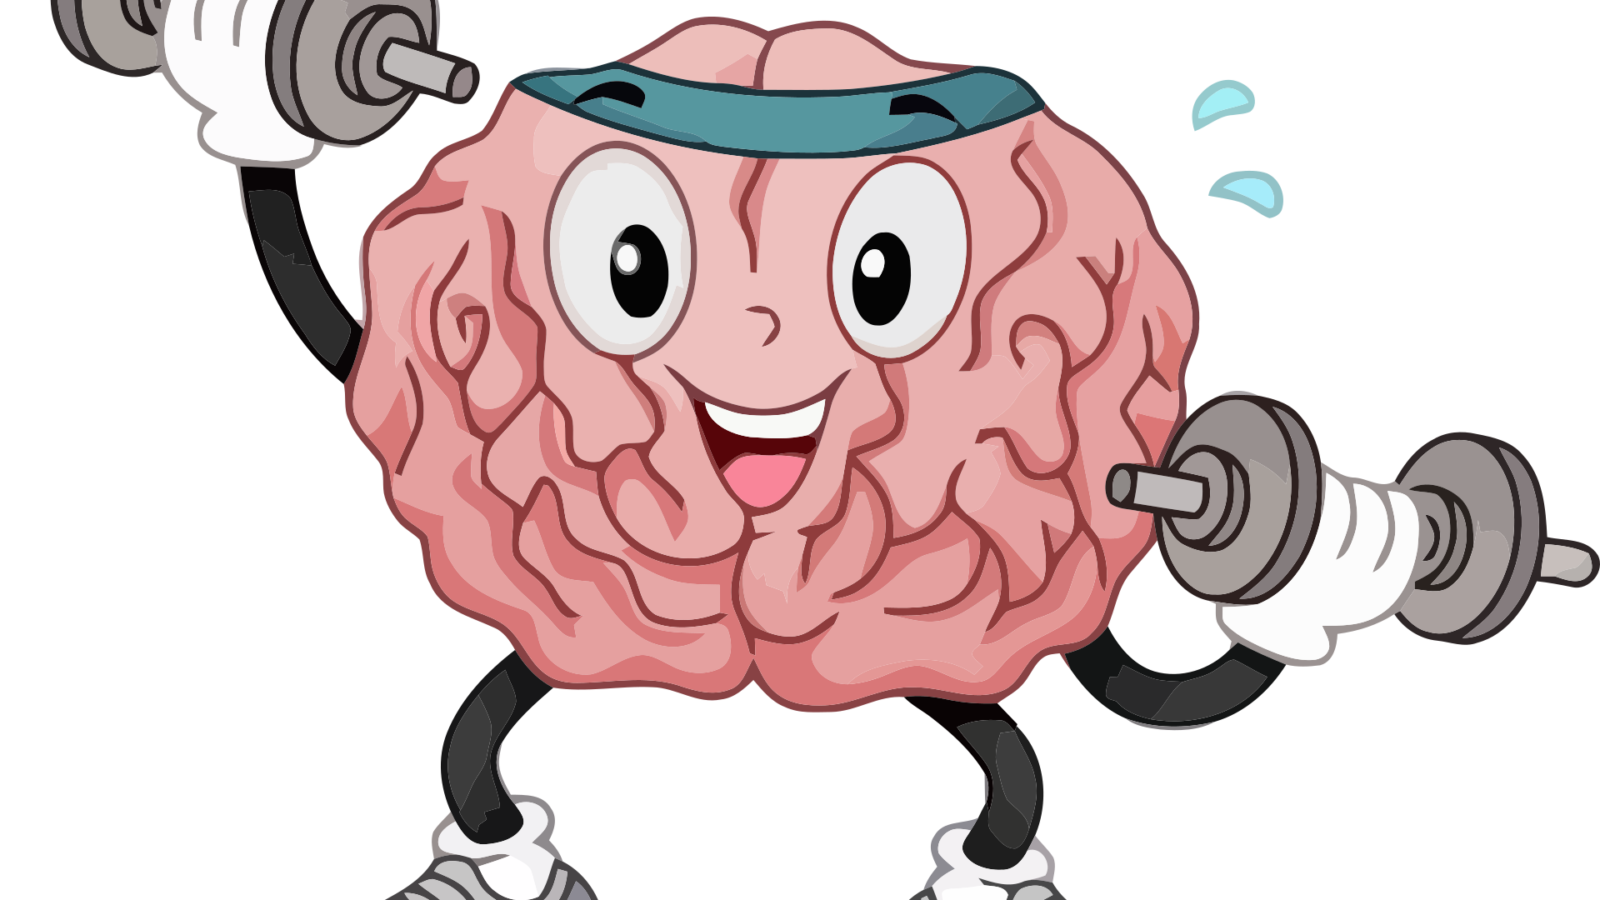 Cartoon-like happy brain doing exercise